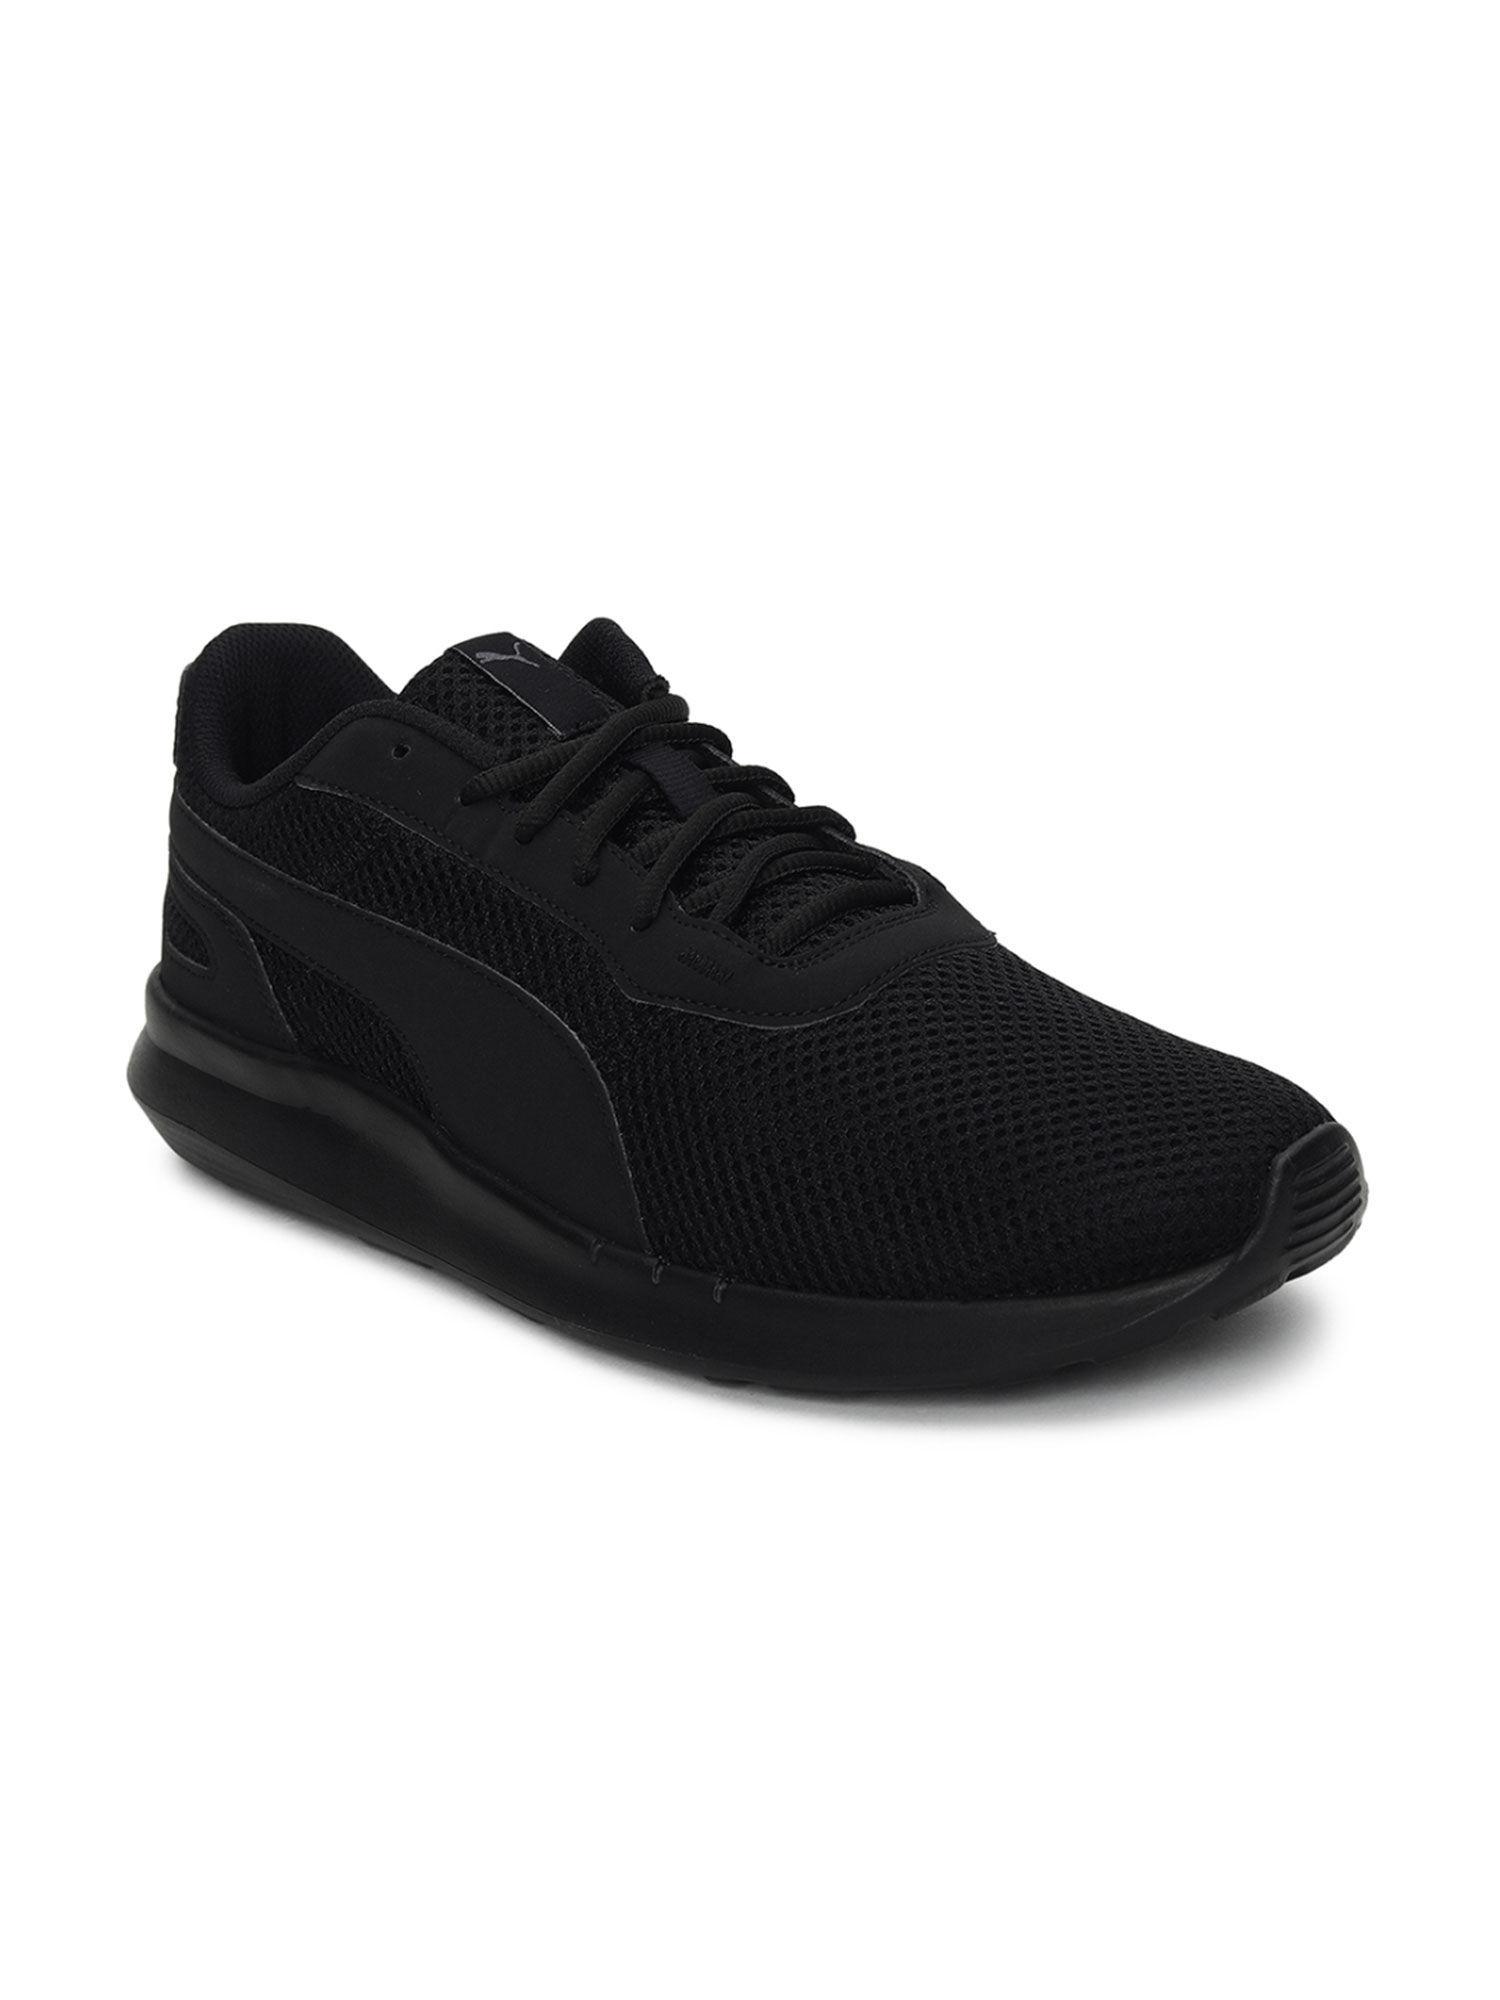 cliff unisex black running shoes